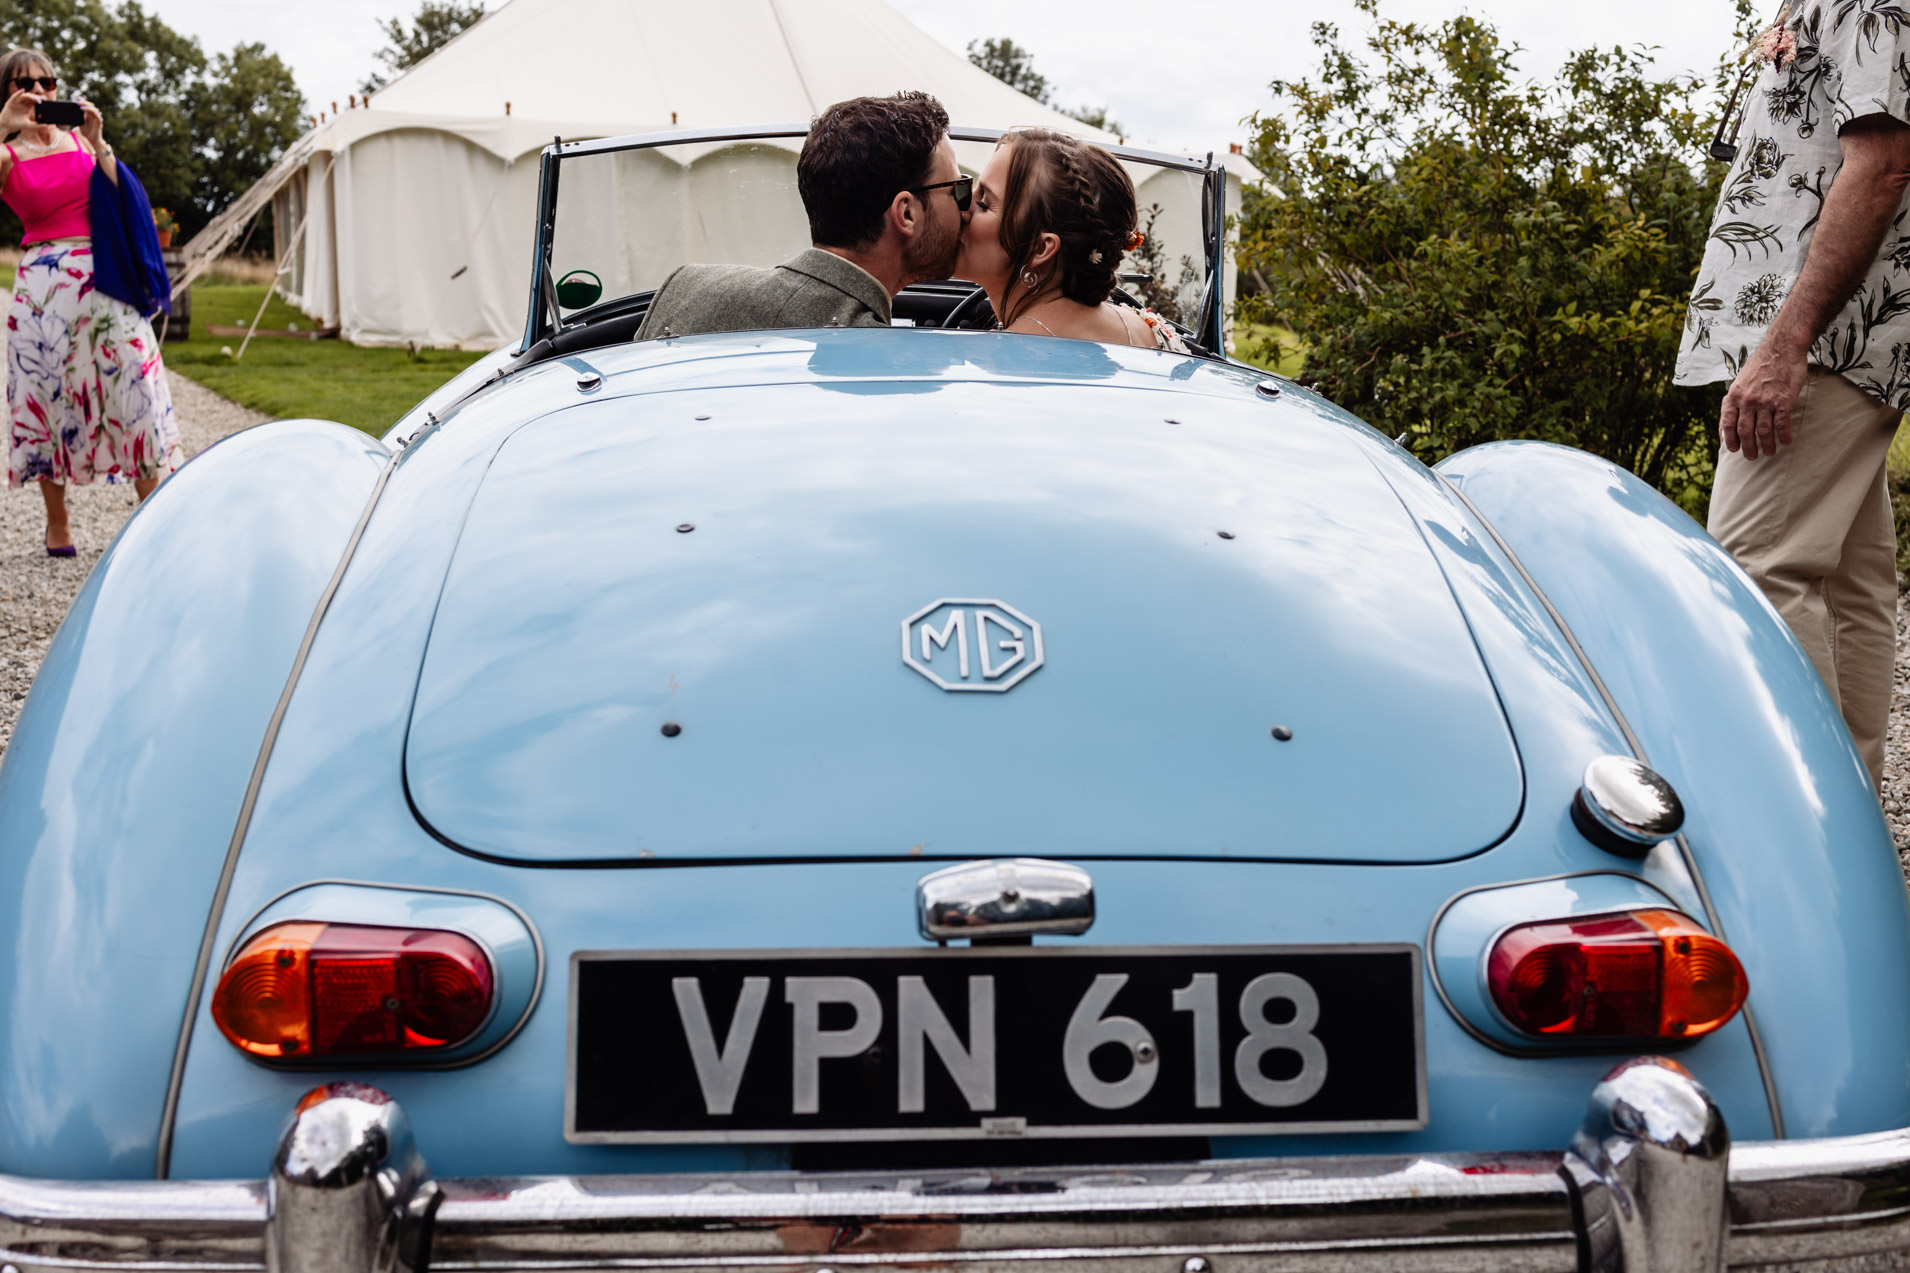 bride and groom kiss in vintage MG car at wonwood barton wedding